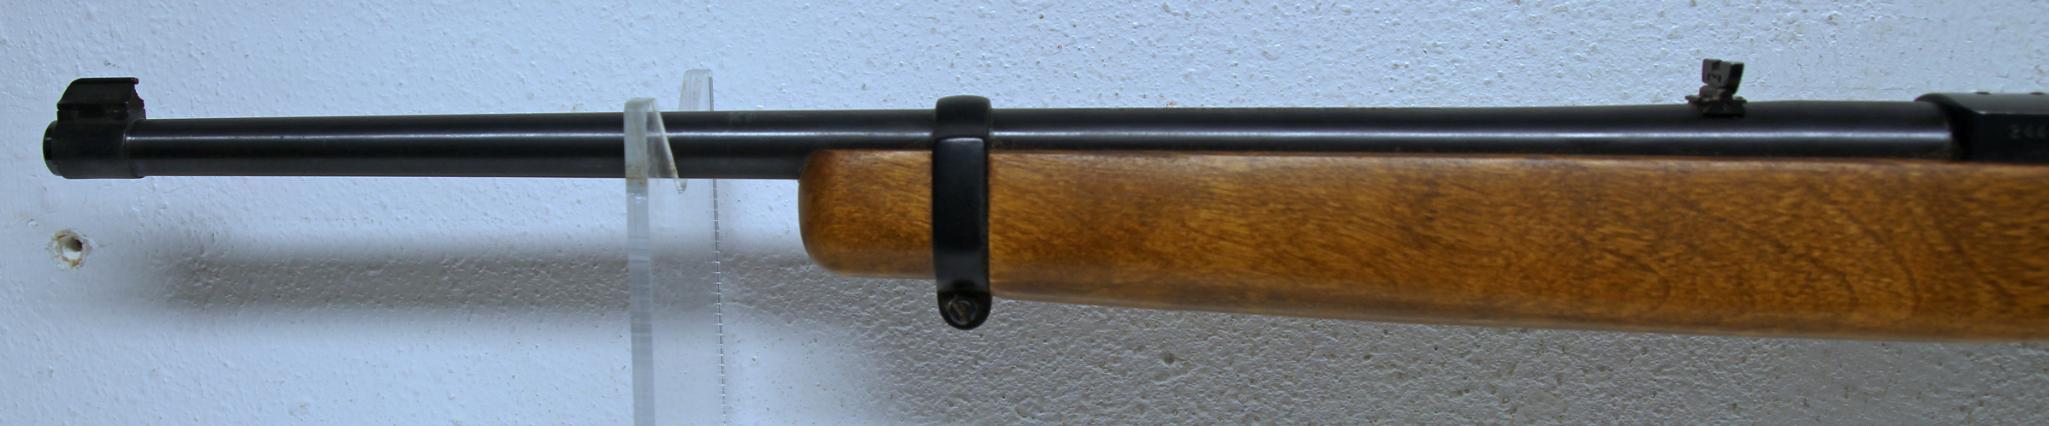 Ruger Model 10/22 Carbine .22 LR Semi-Auto Rifle SN#244-46139